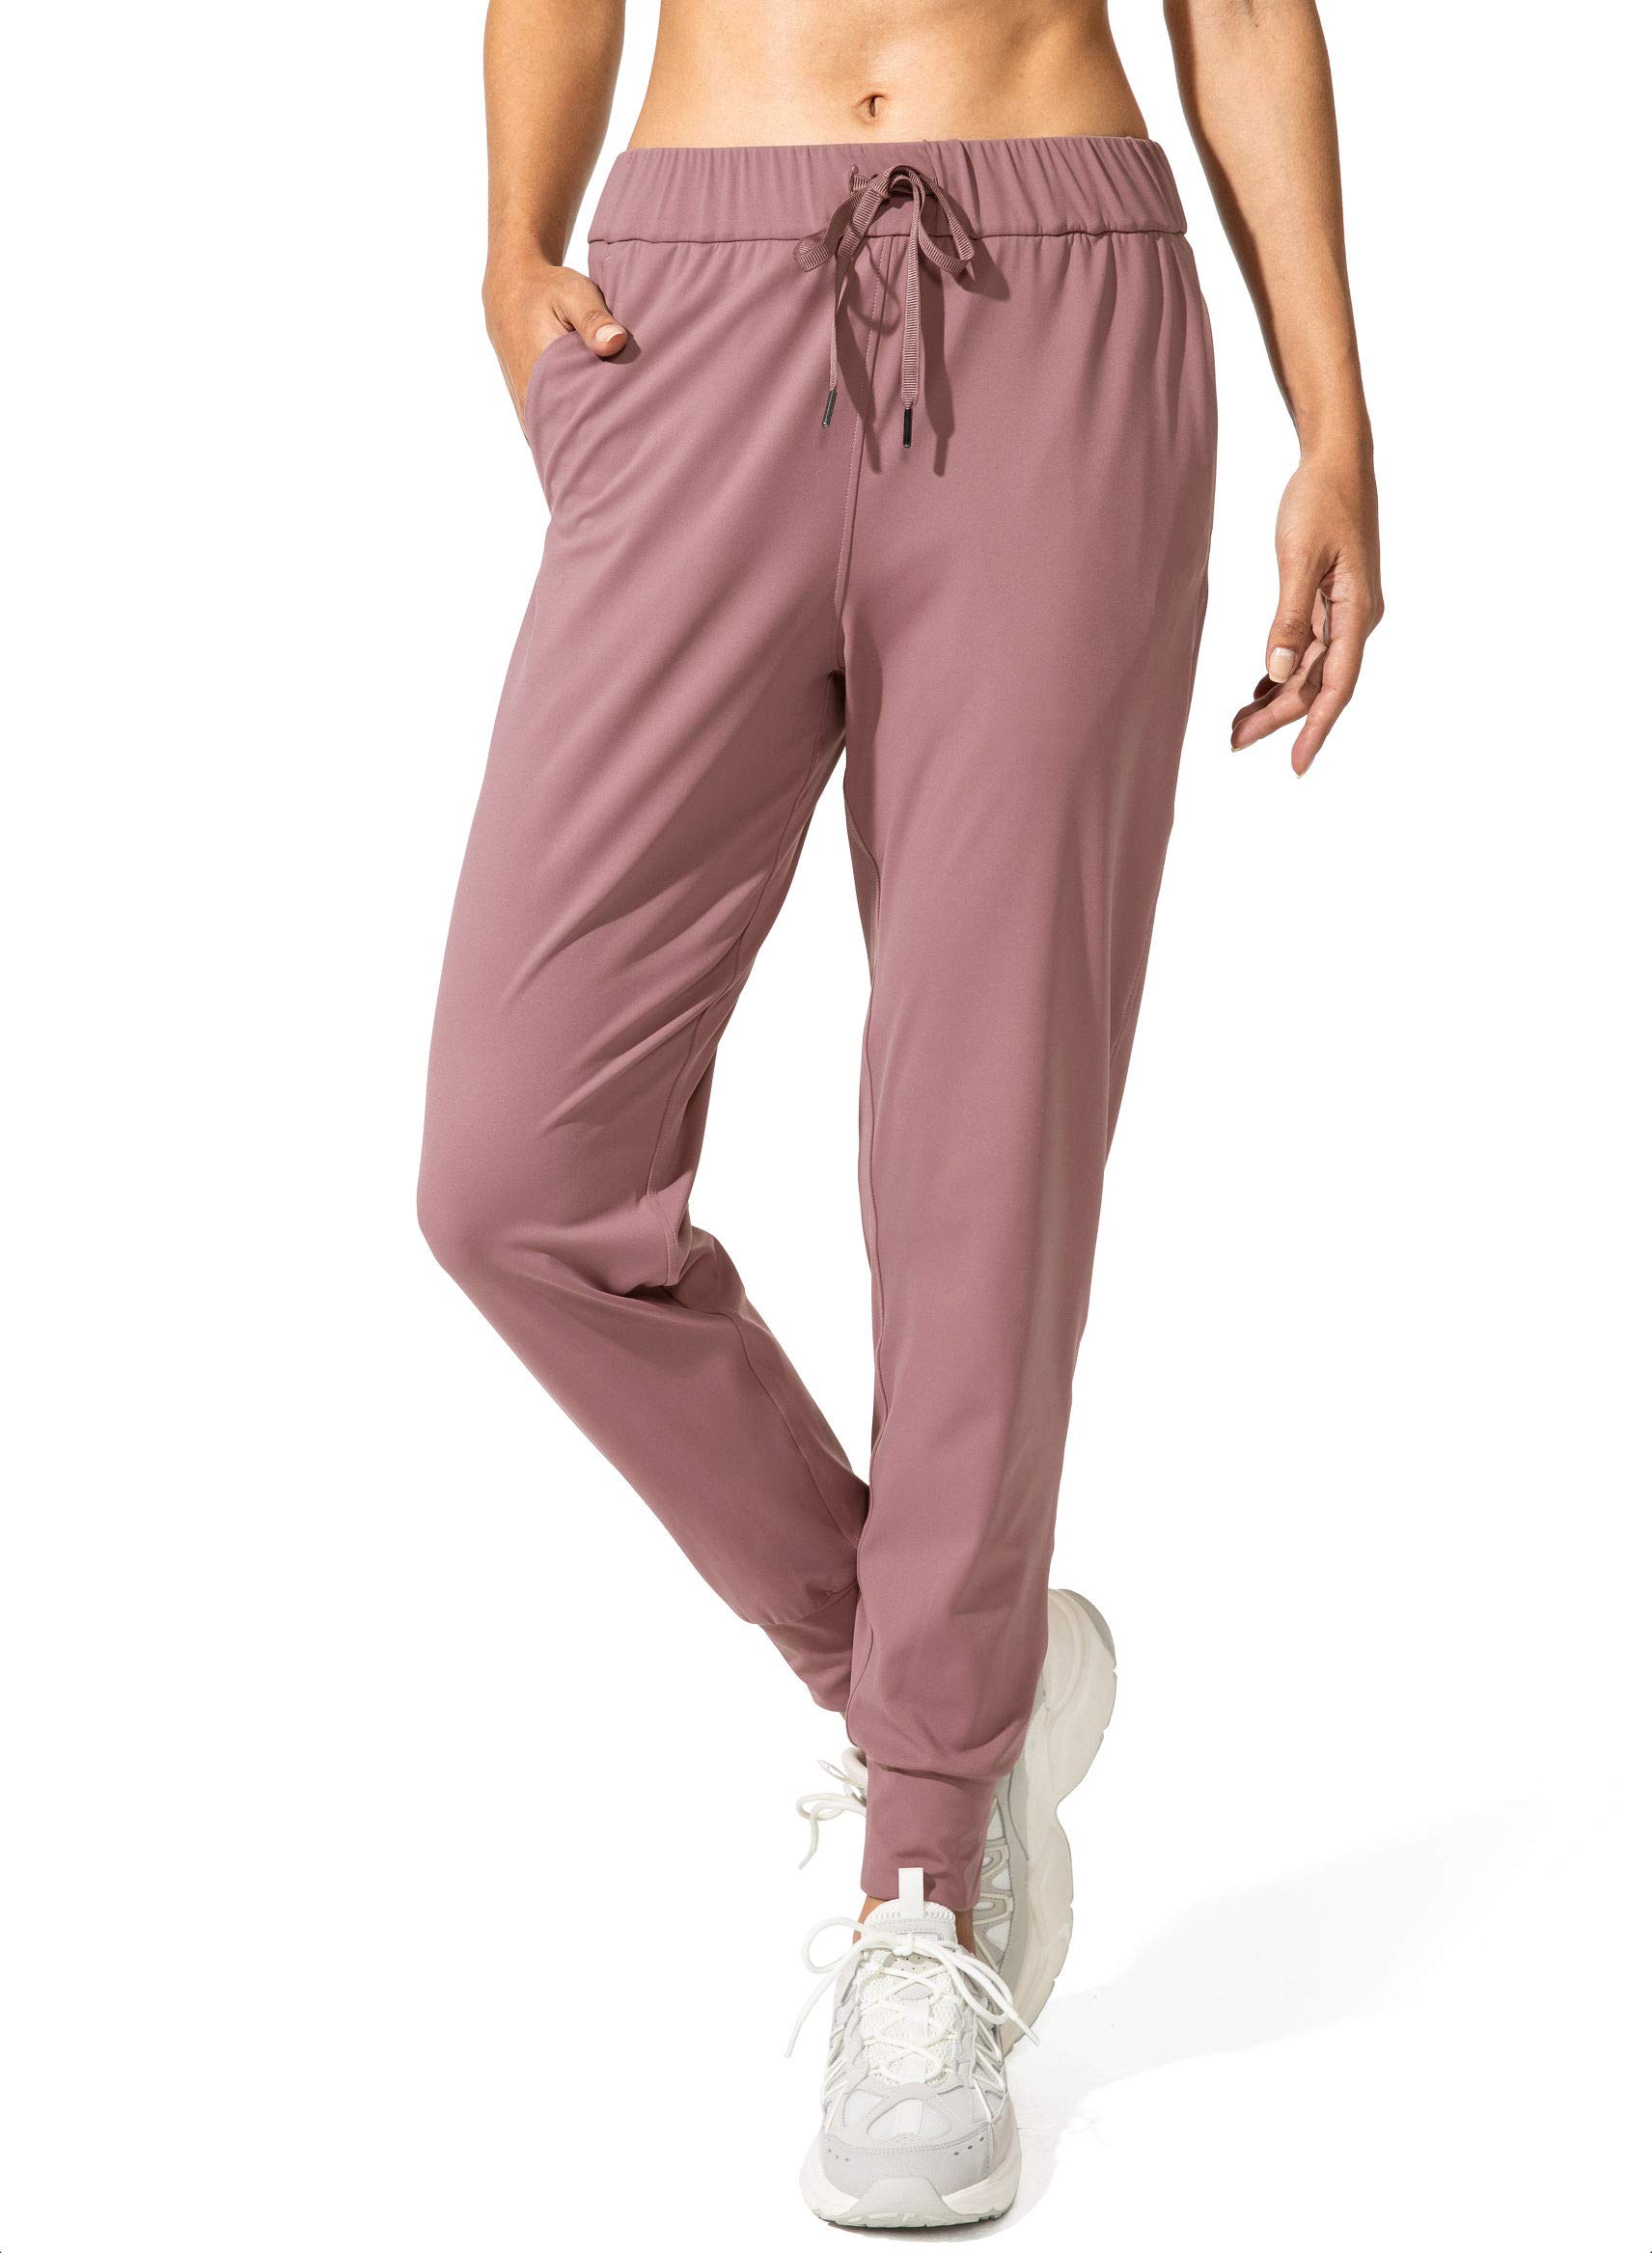 SANTINY Womens Joggers Pants Pockets Drawstring Running Sweatpants for Women Lounge Workout Jogging(Mauve Pink_L)